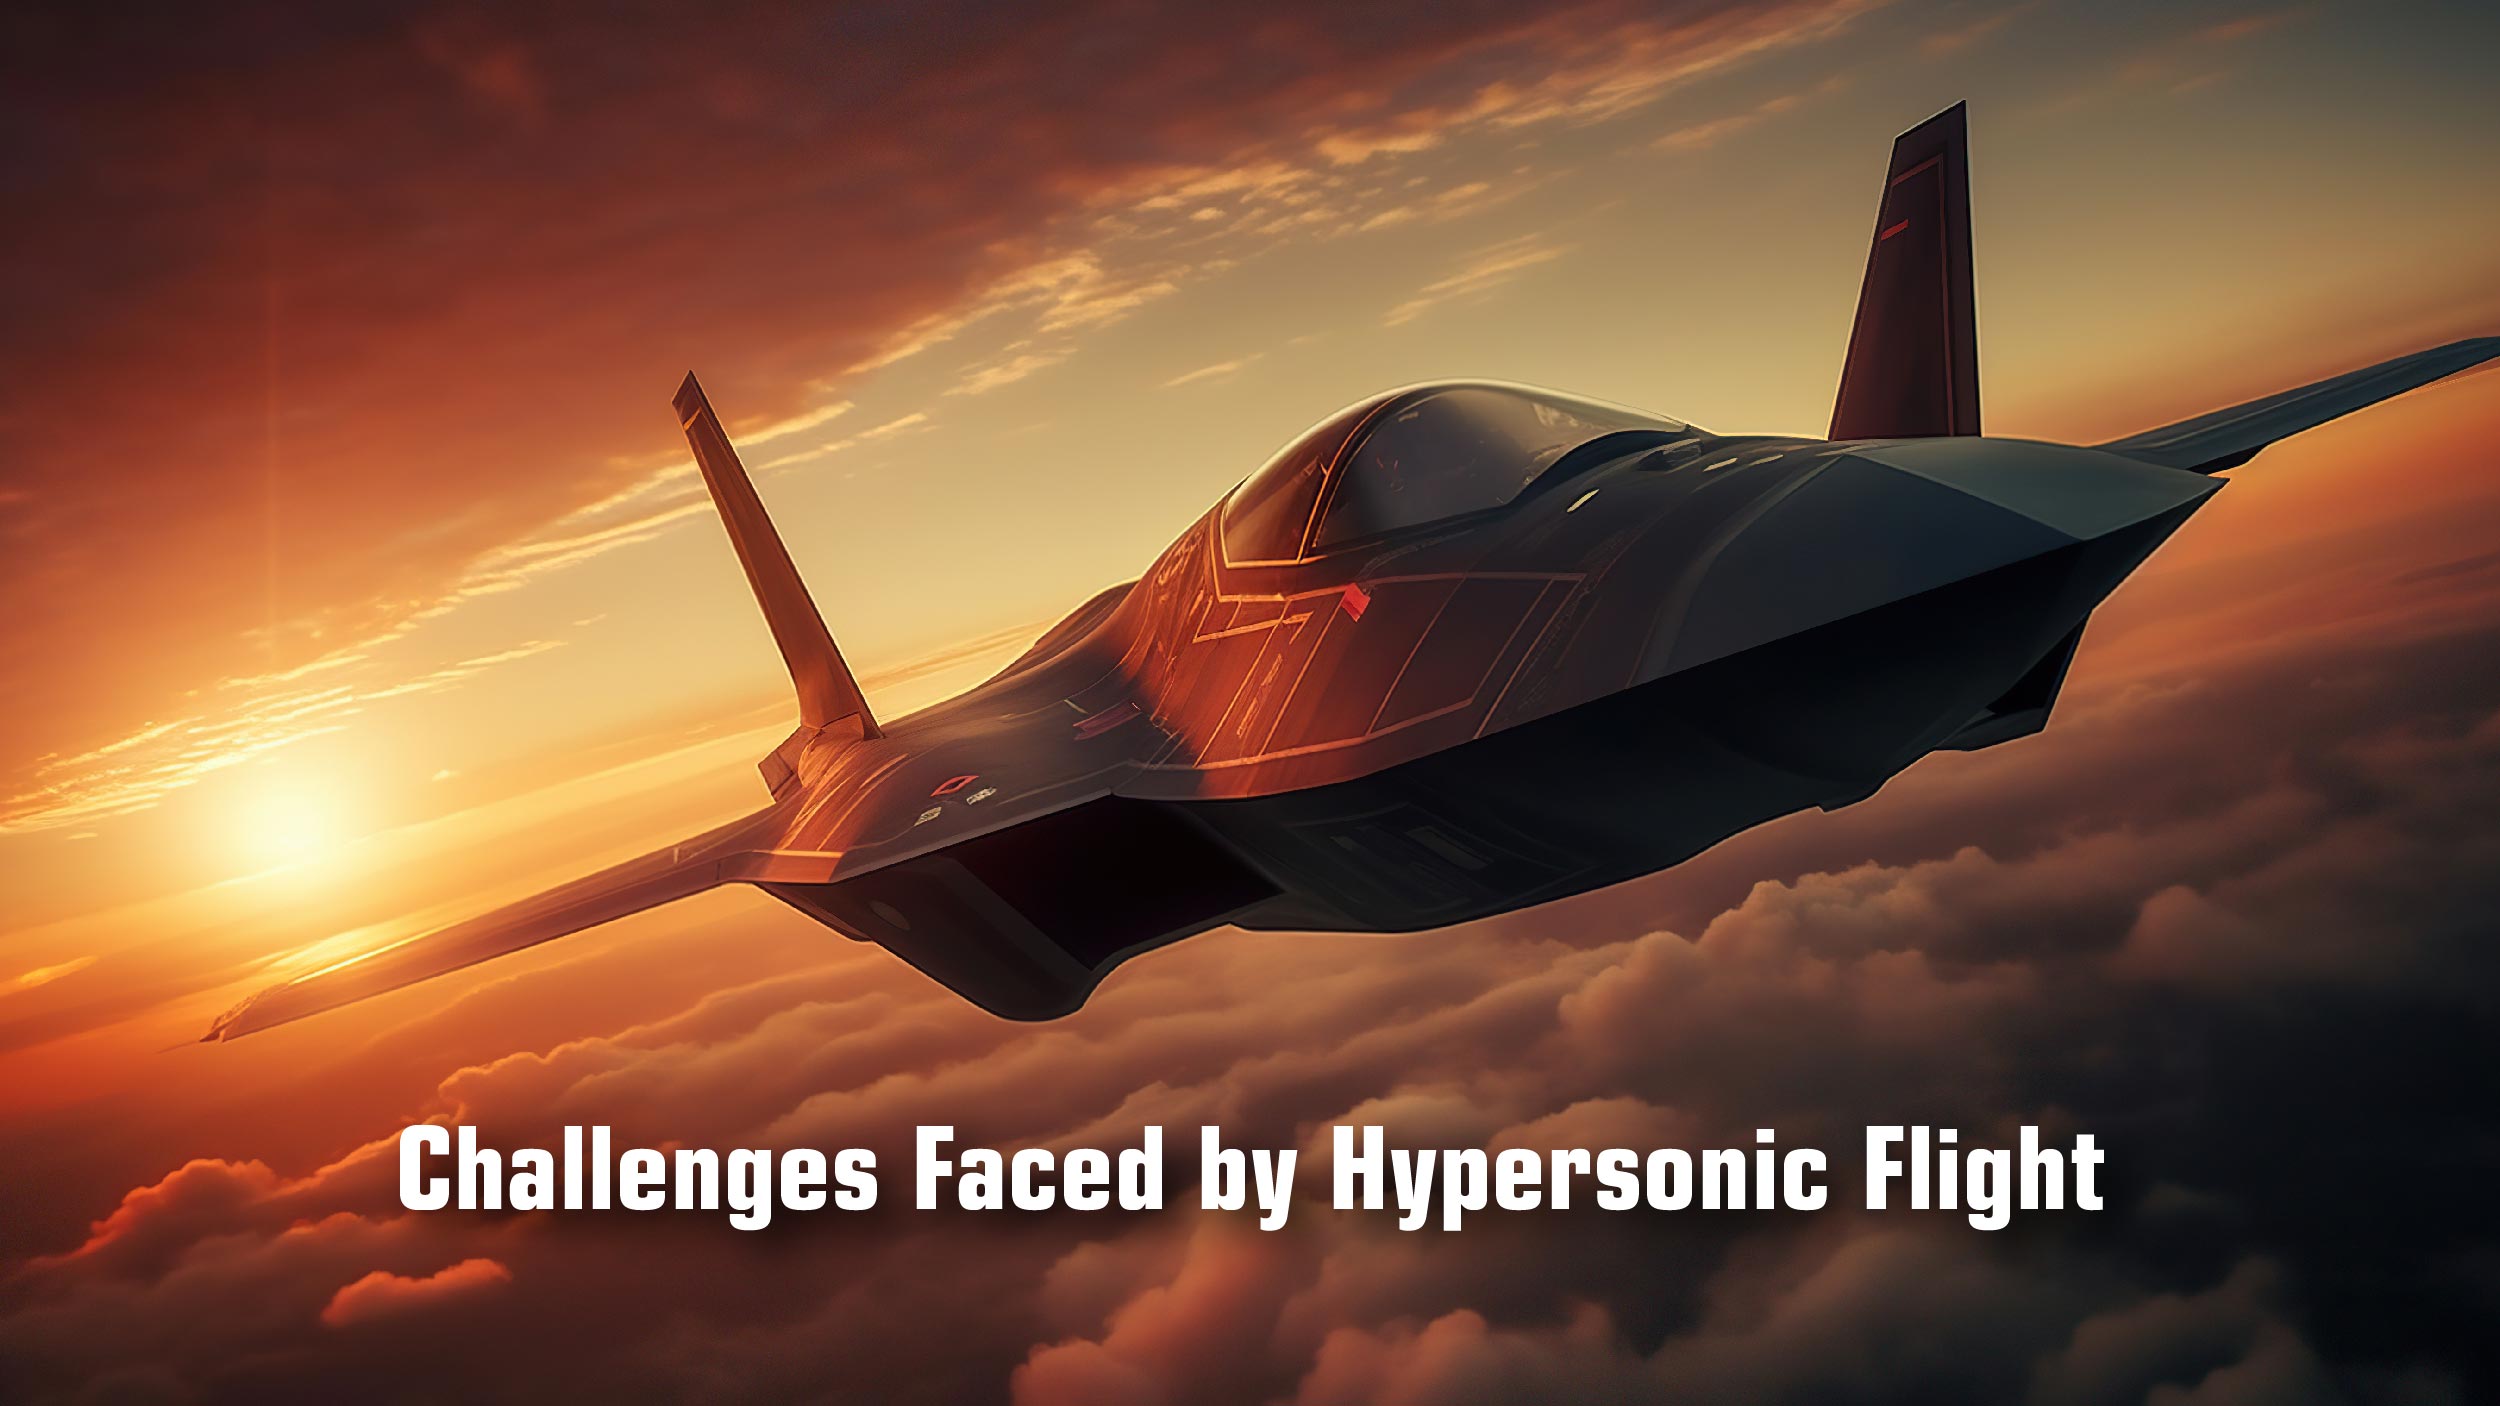 Hypersonic flight